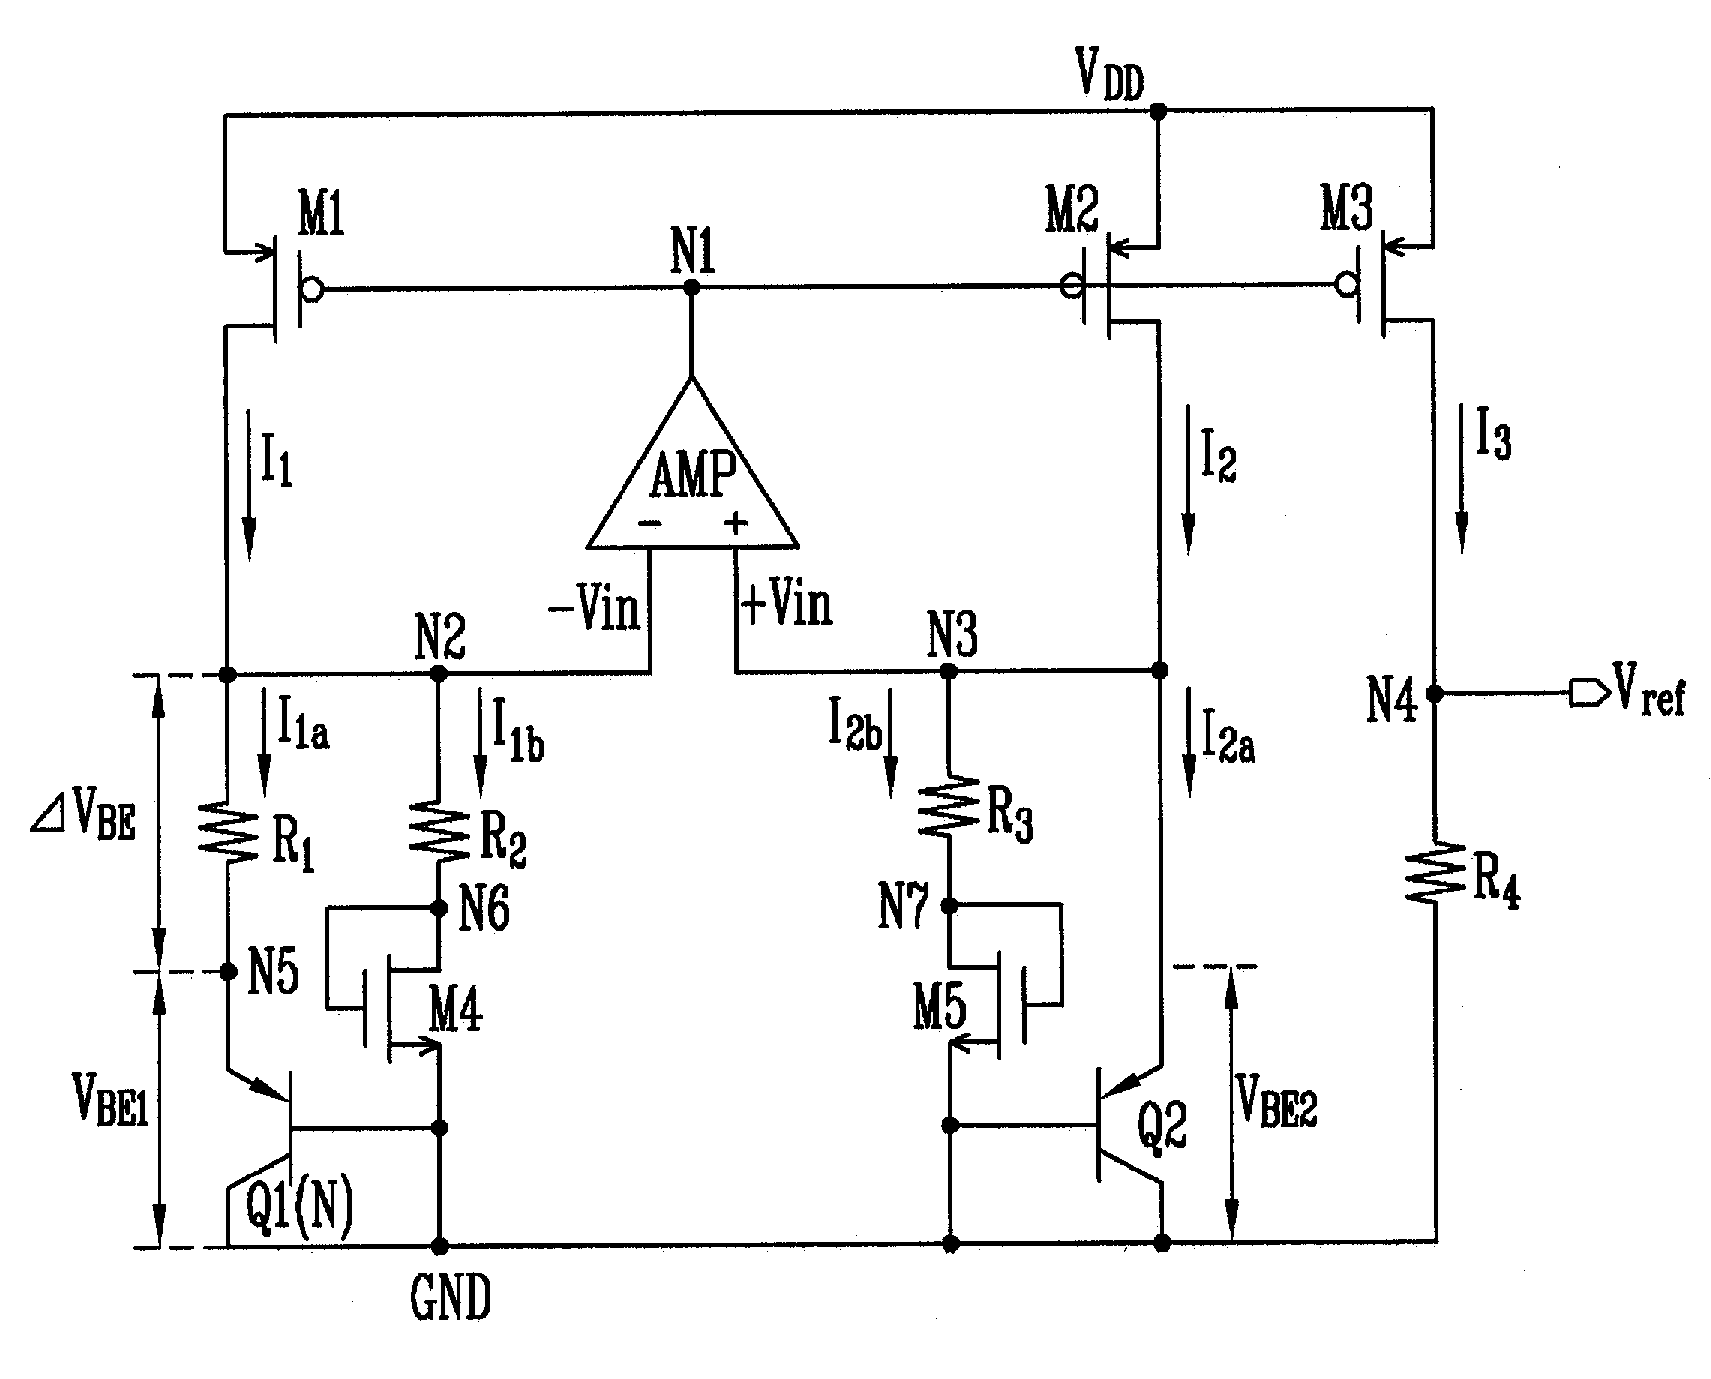 Band-gap reference voltage generator